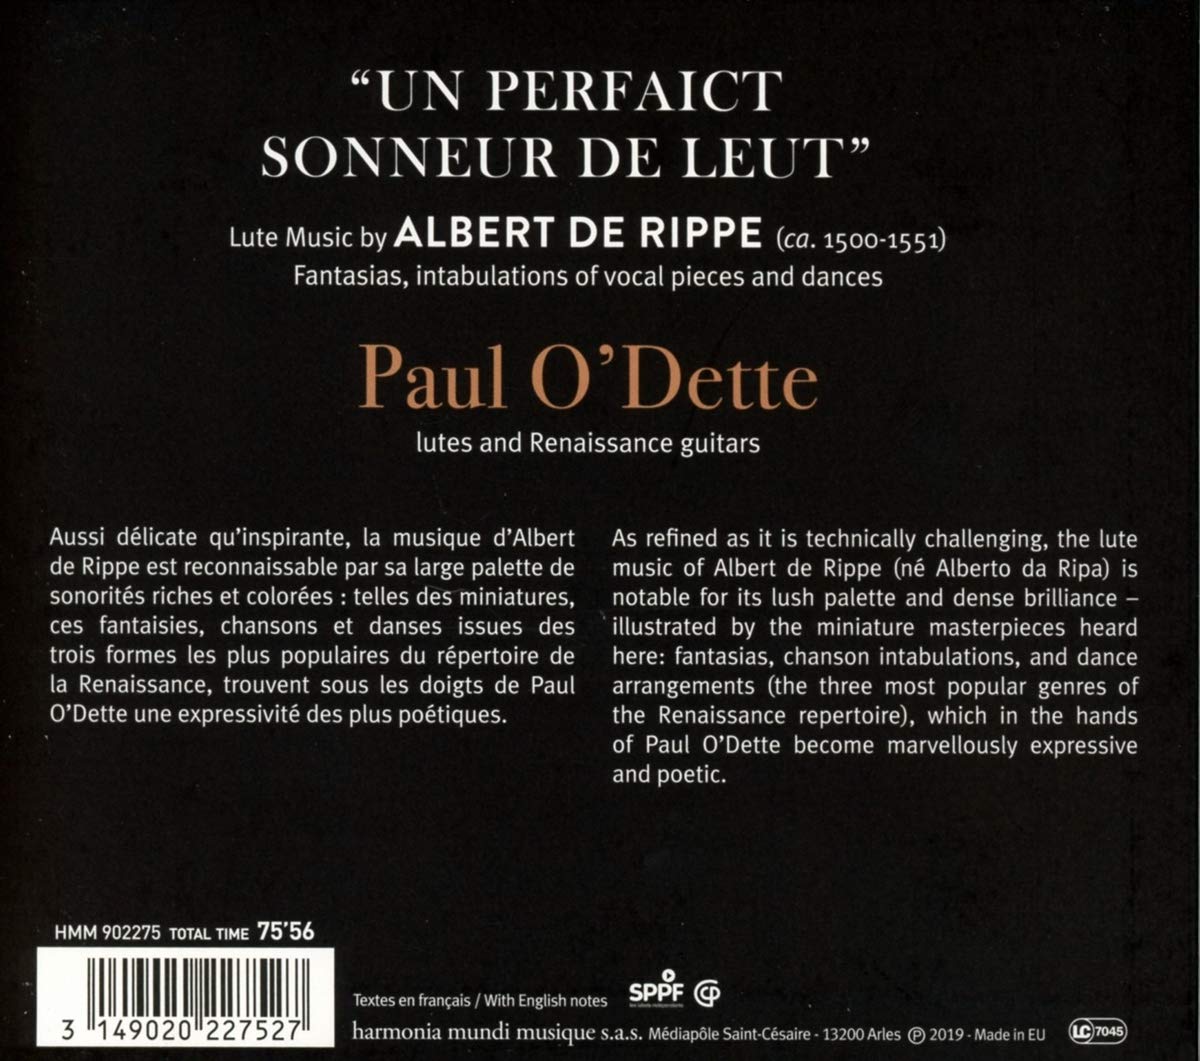 Paul O'Dette 알베르트 데 리페: 류트 음악 (Albert de Rippe: Un Perfaict Sonneur de Leut)